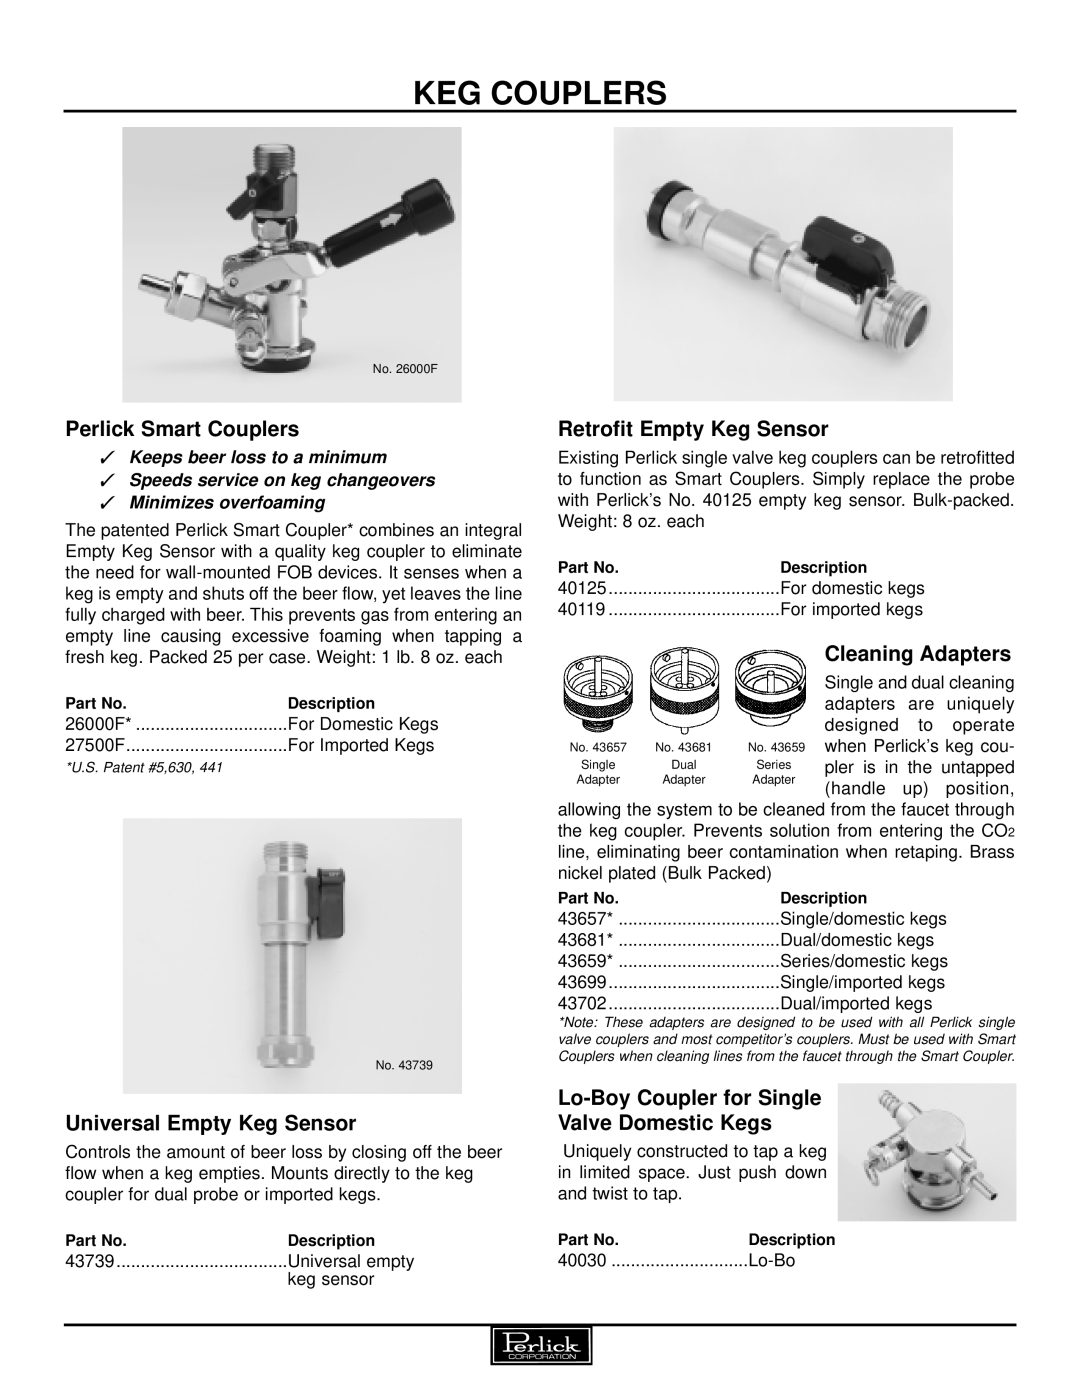 Perlick Keg Couplers Tapping Equipment manual Perlick Smart Couplers, Retrofit Empty Keg Sensor, Cleaning Adapters 